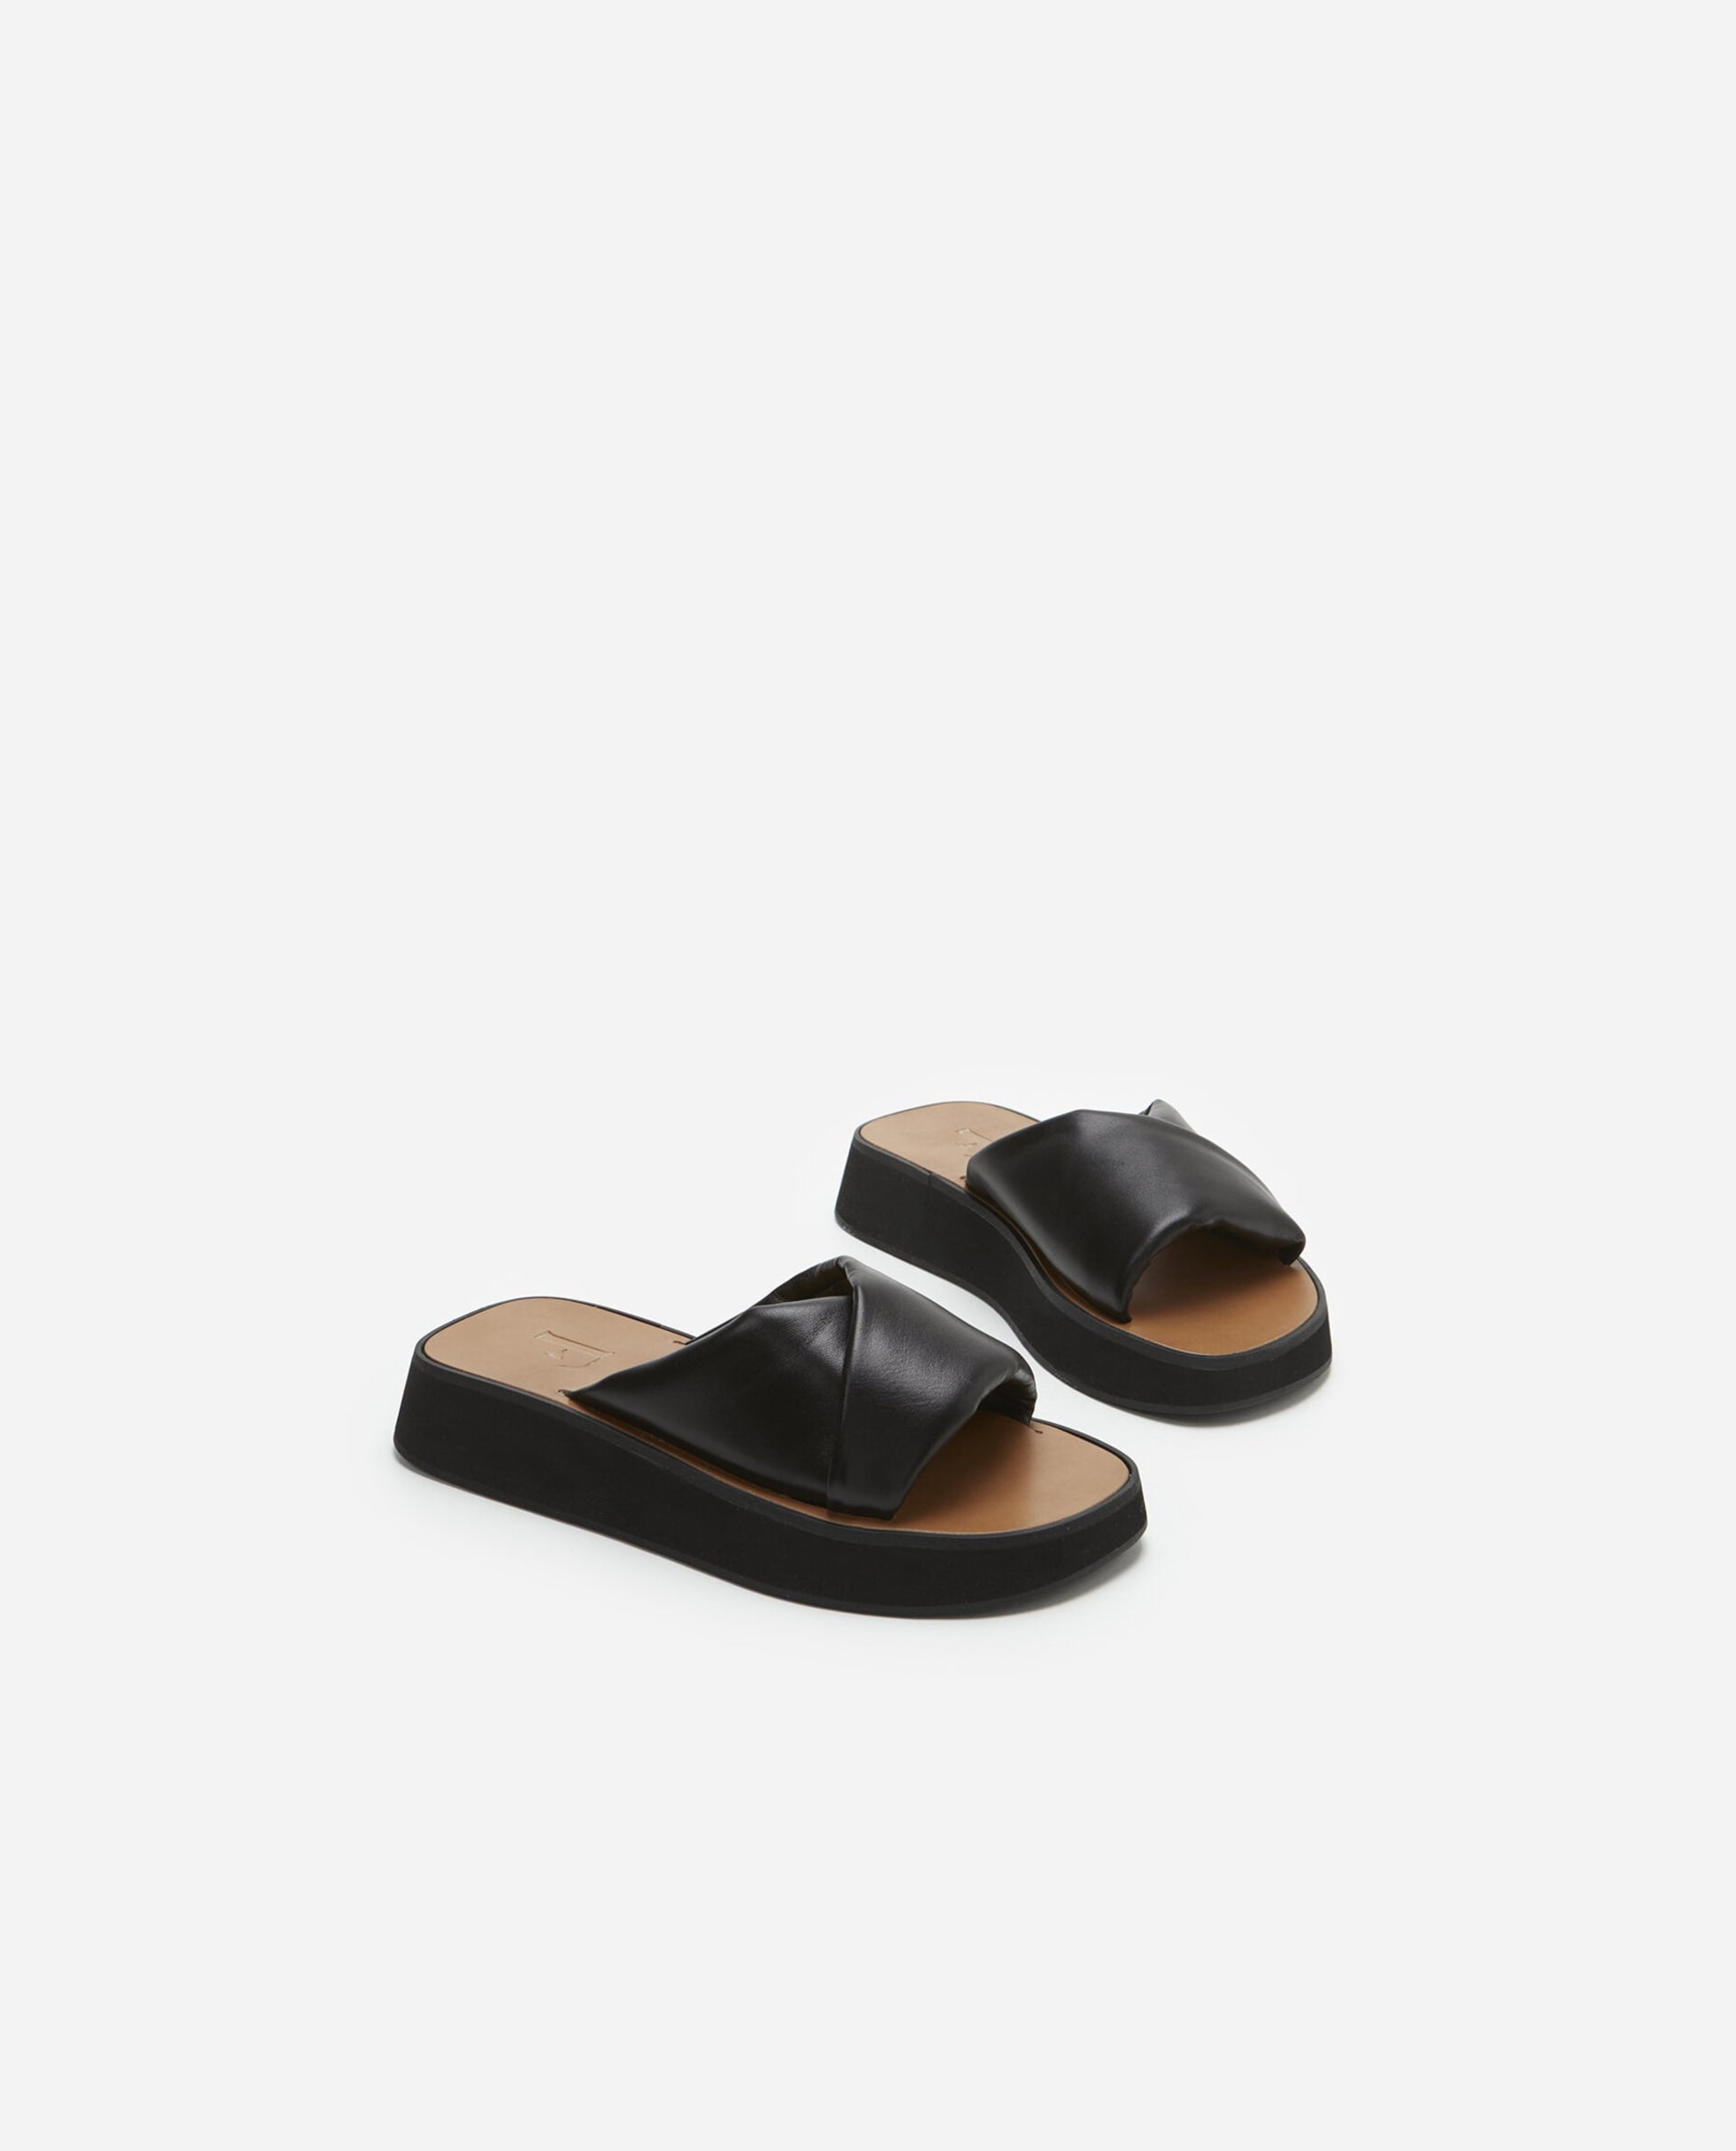 Bea Black Leather Flat Sandals 22010721101-001 - 4